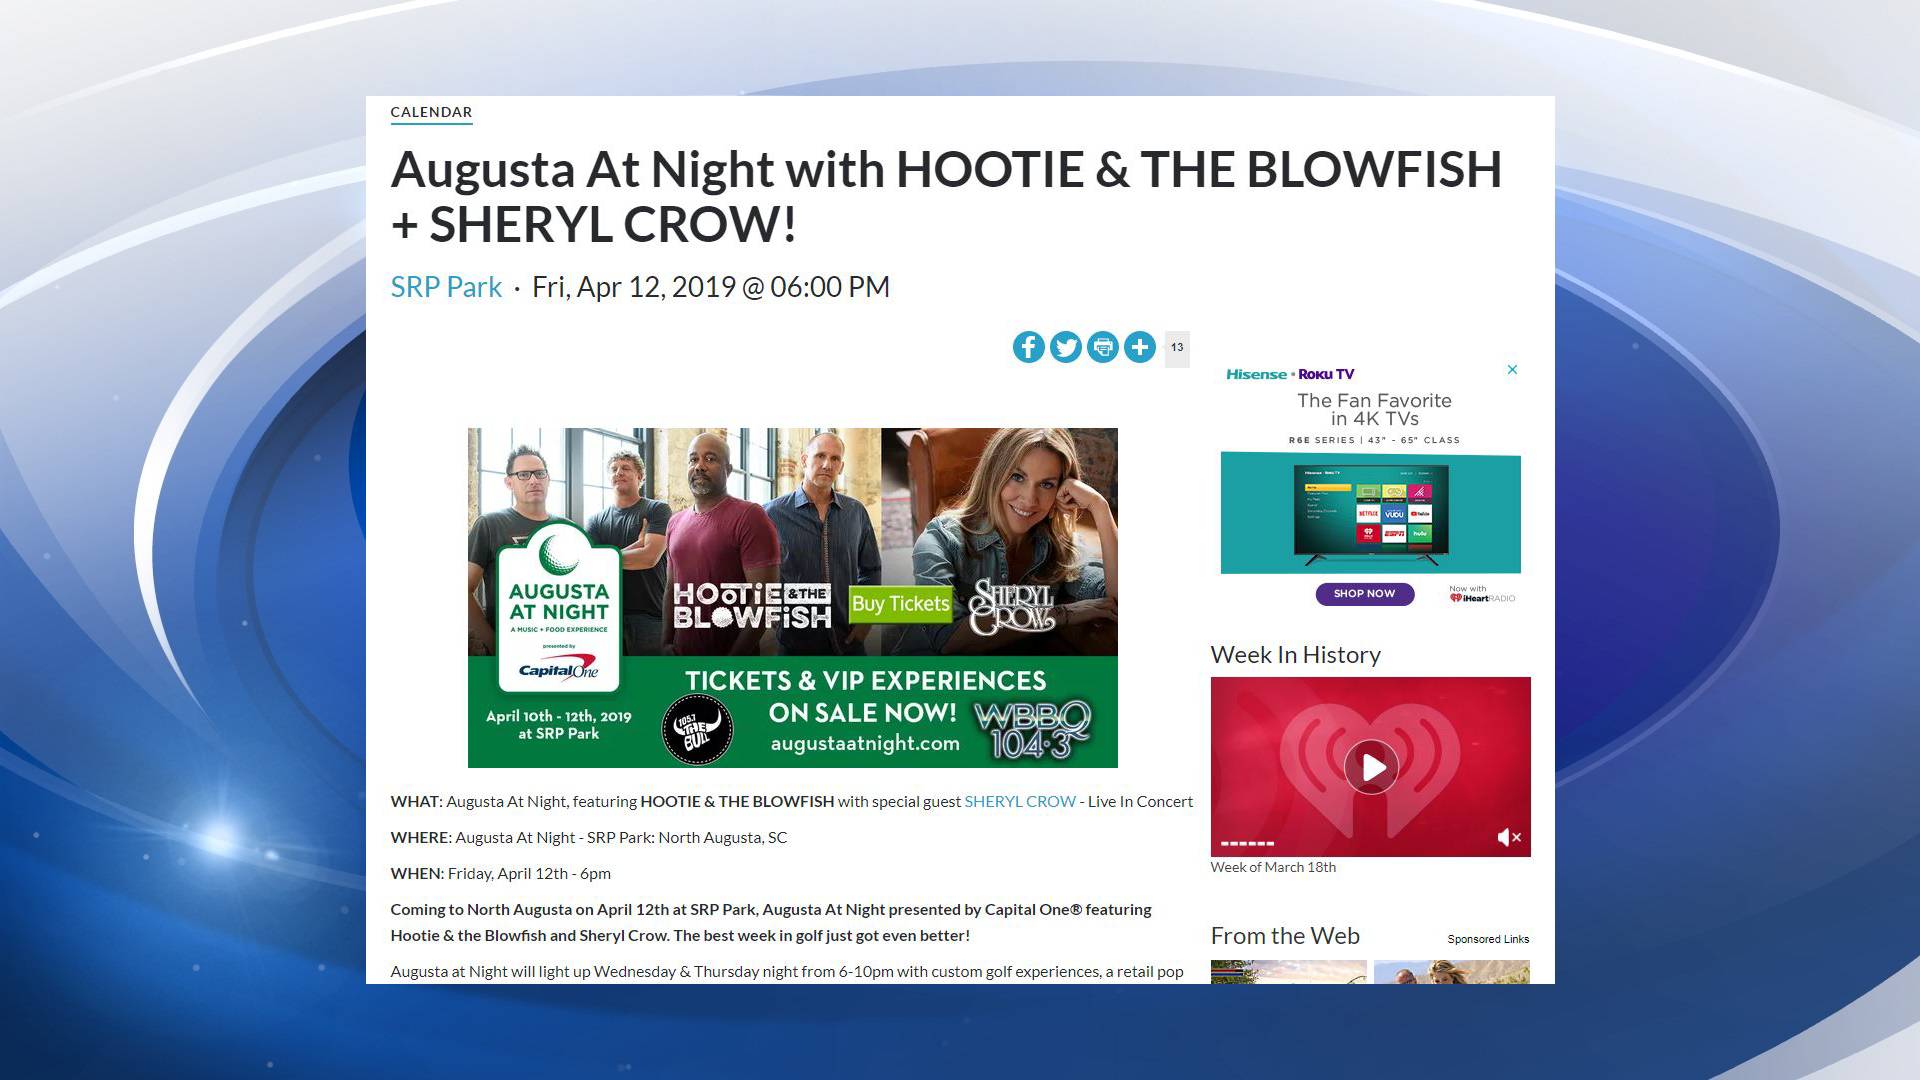 blowfish website